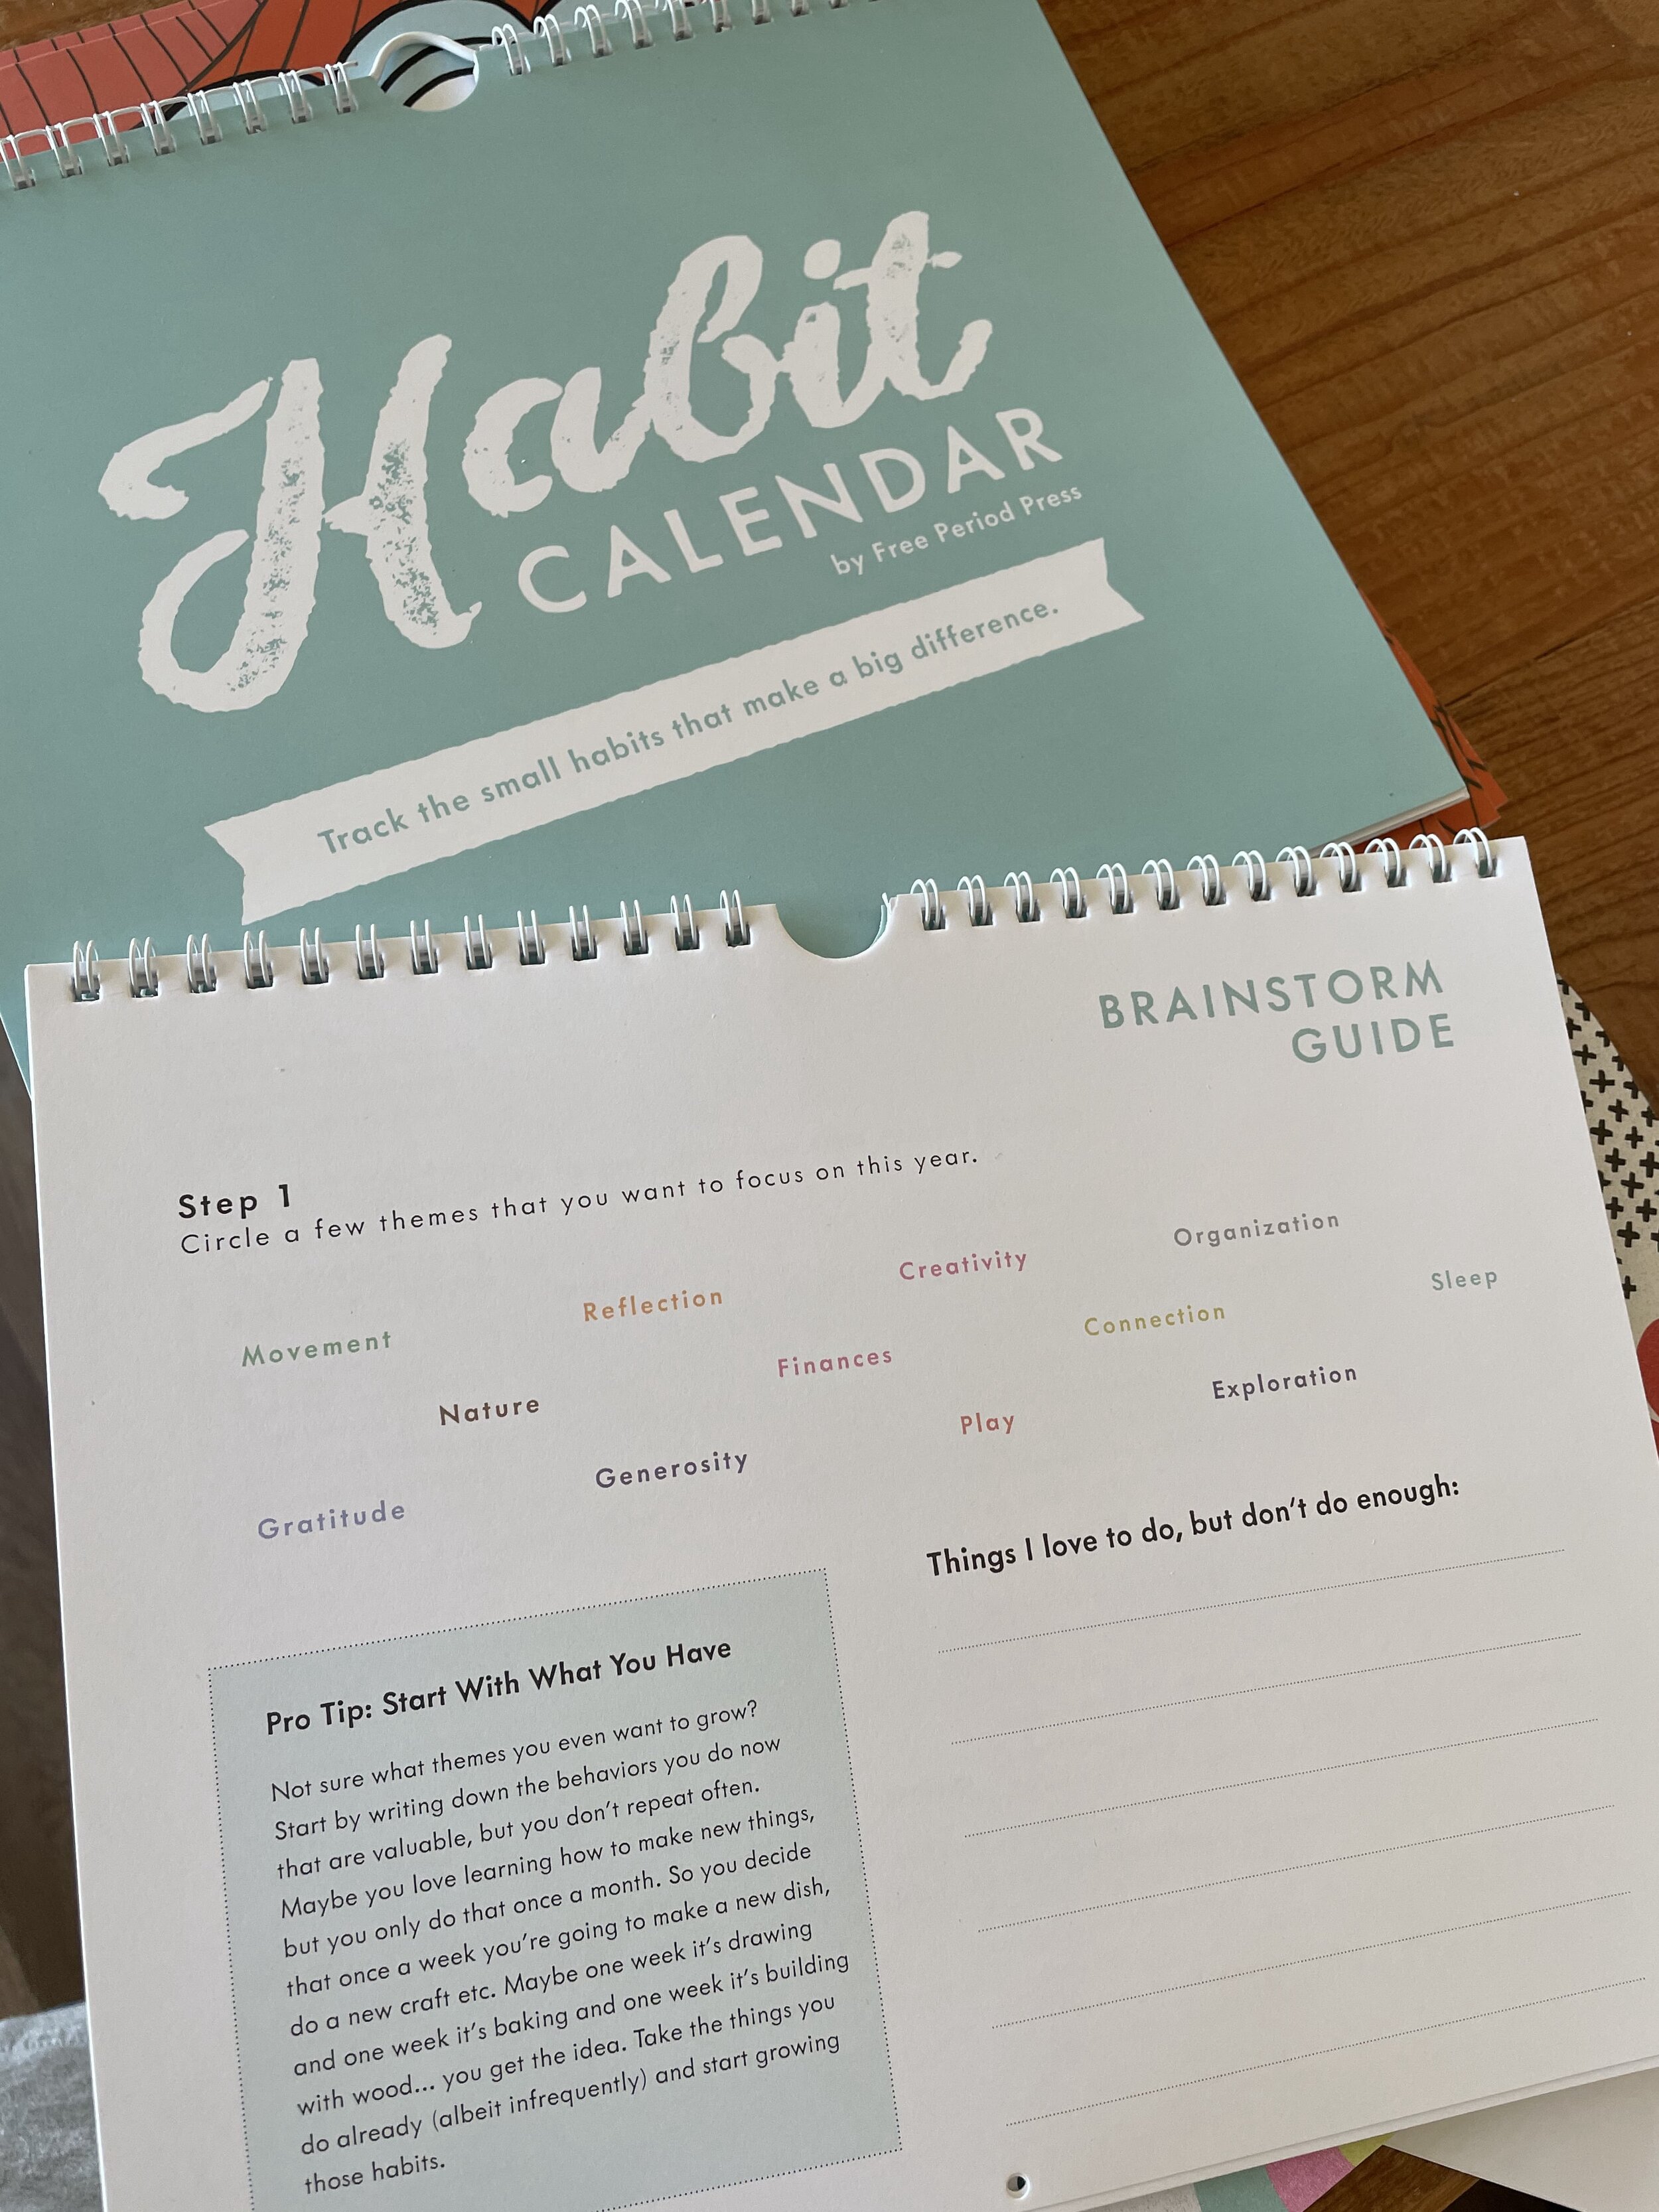 Habit Calendar by free period press